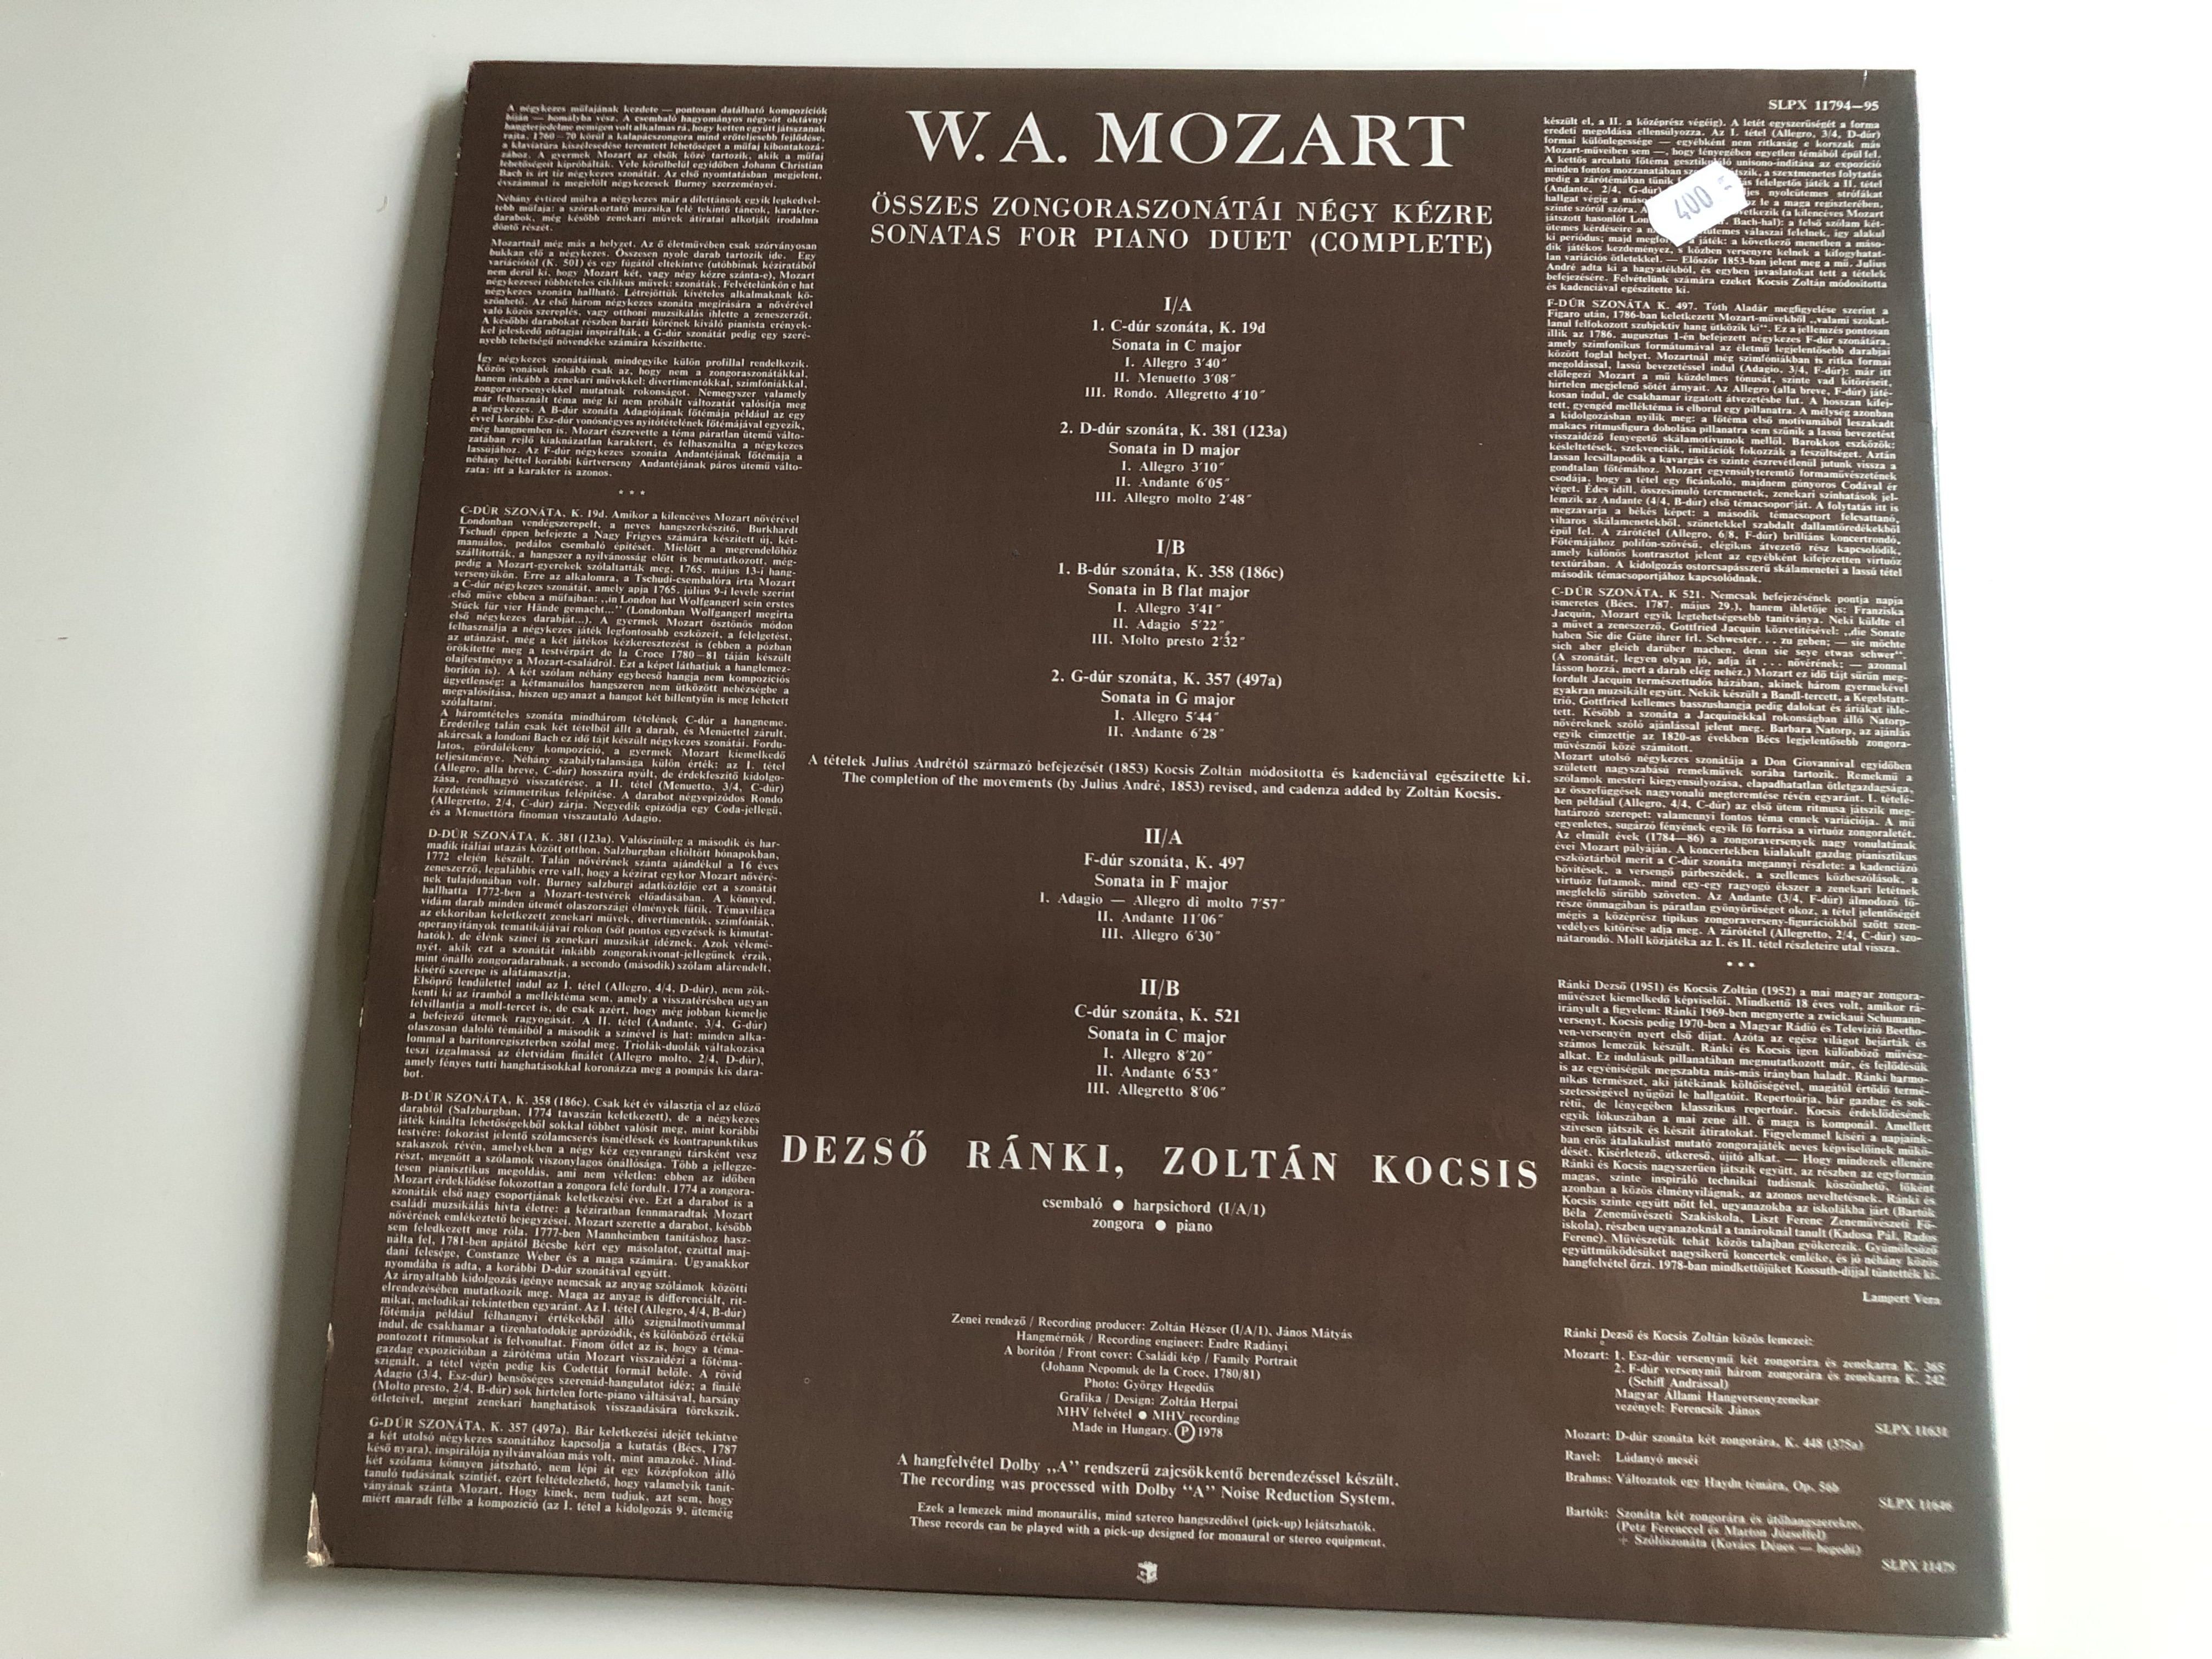 mozart-sonatas-for-piano-duet-complete-dezs-r-nki-zolt-n-kocsis-hungaroton-2x-lp-stereo-mono-slpx-11794-95-4-.jpg